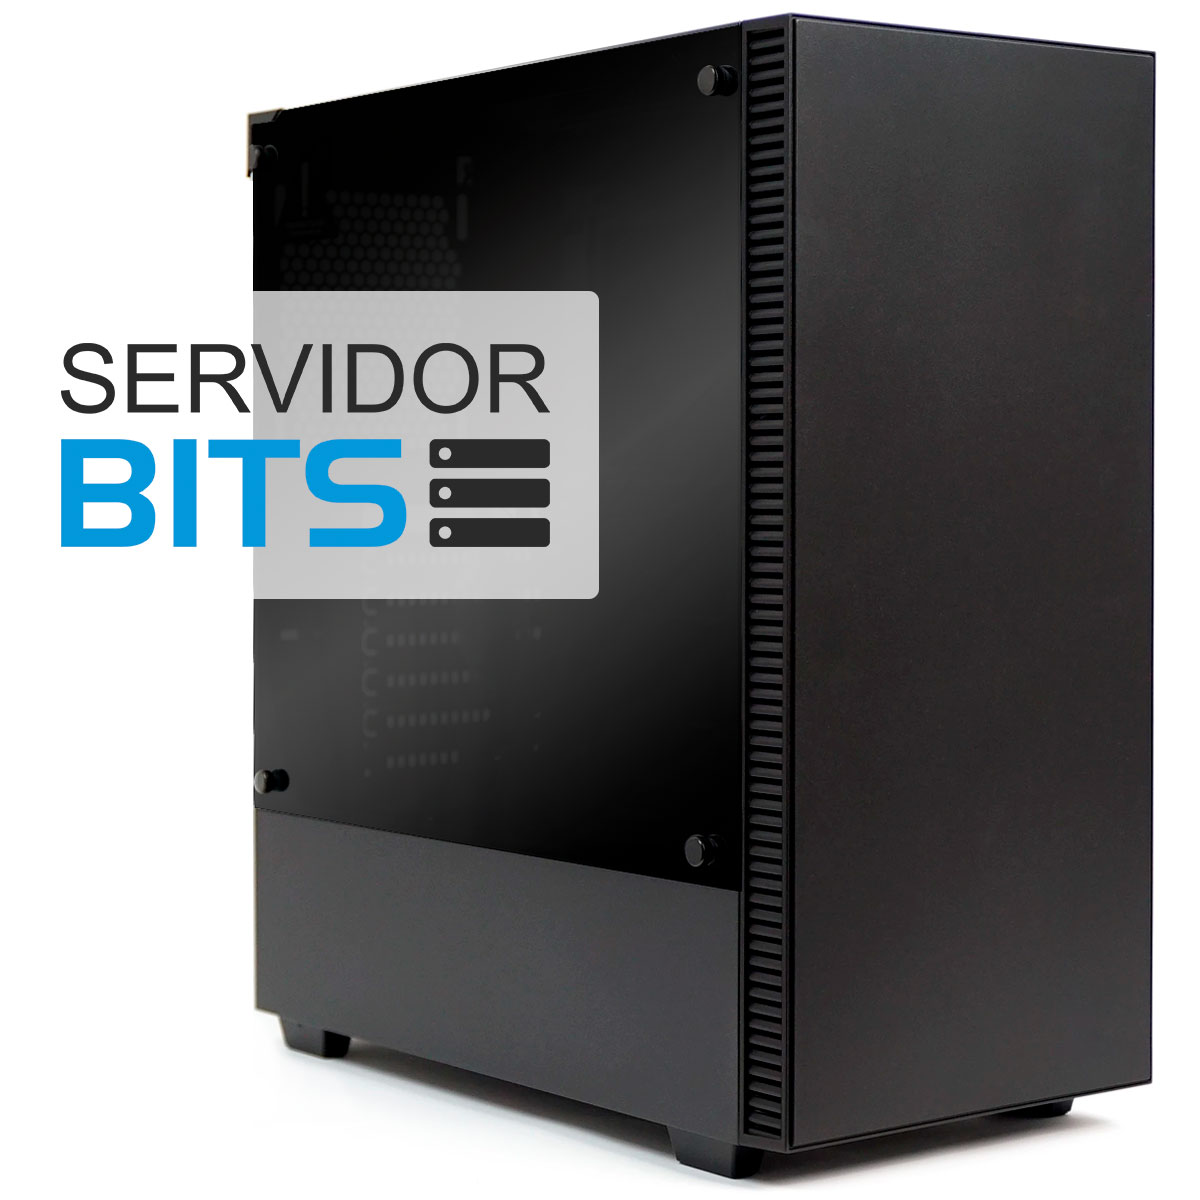 Servidor Bits 2021 - Intel® Xeon® E-2124, RAM 8GB, SSD 500GB NVMe